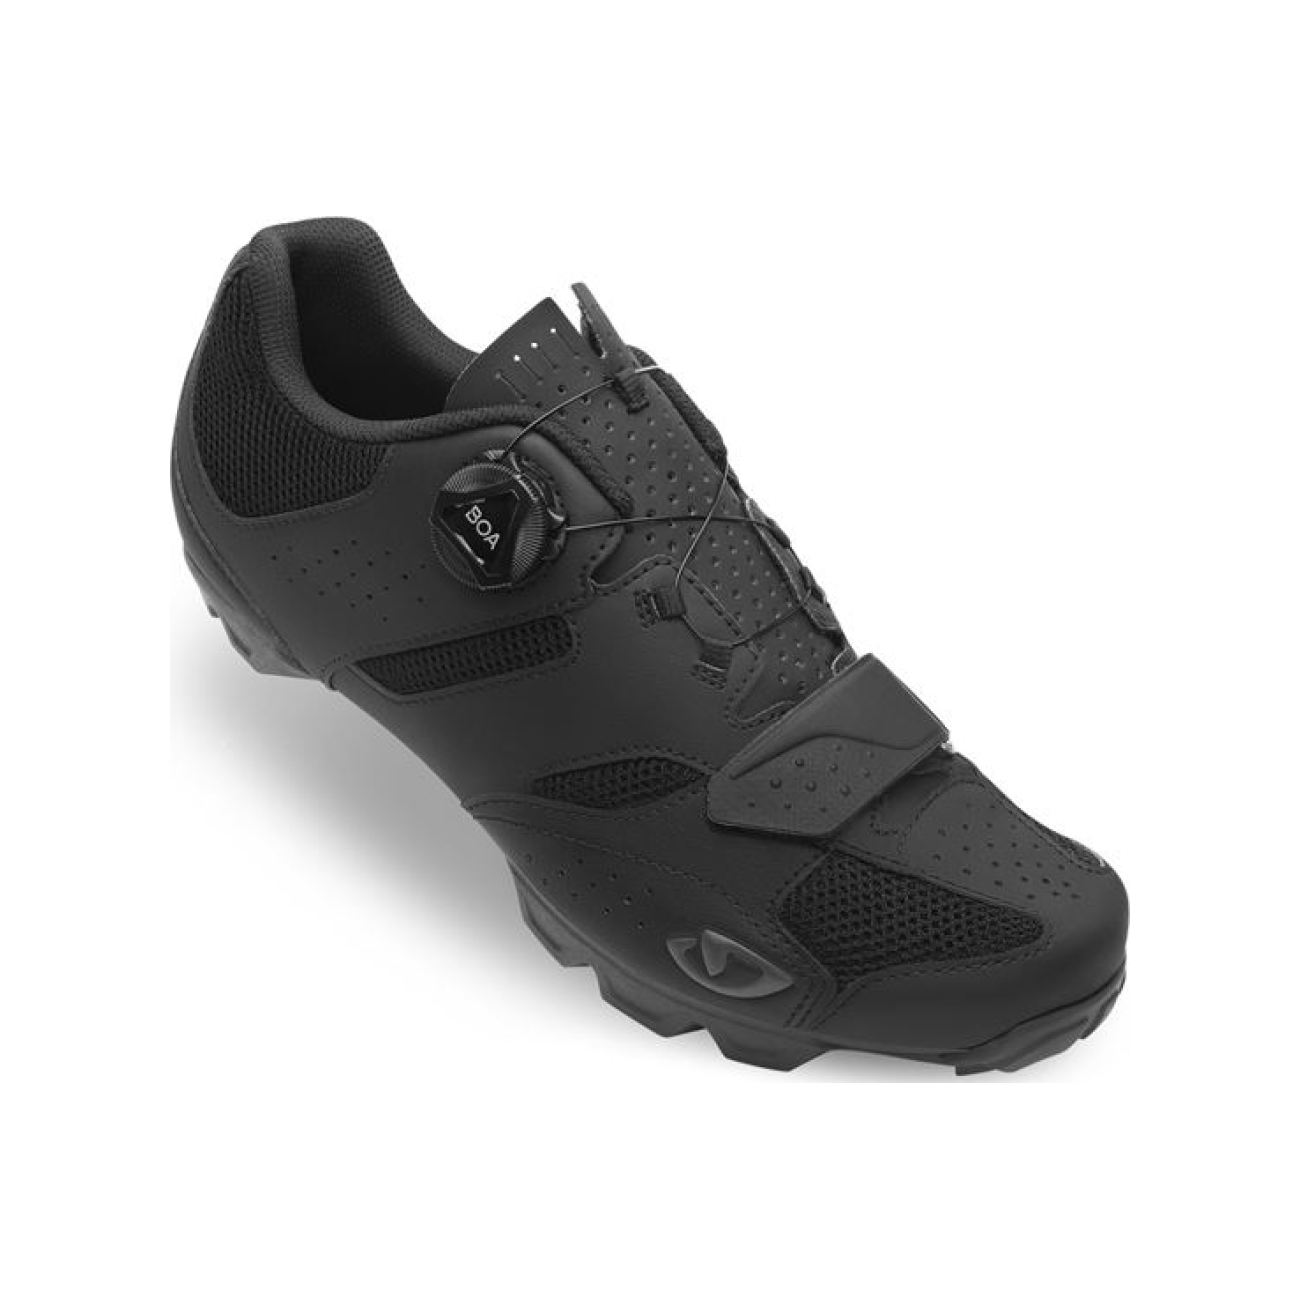 GIRO Kerékpáros Cipő - CYLINDER II - Fekete